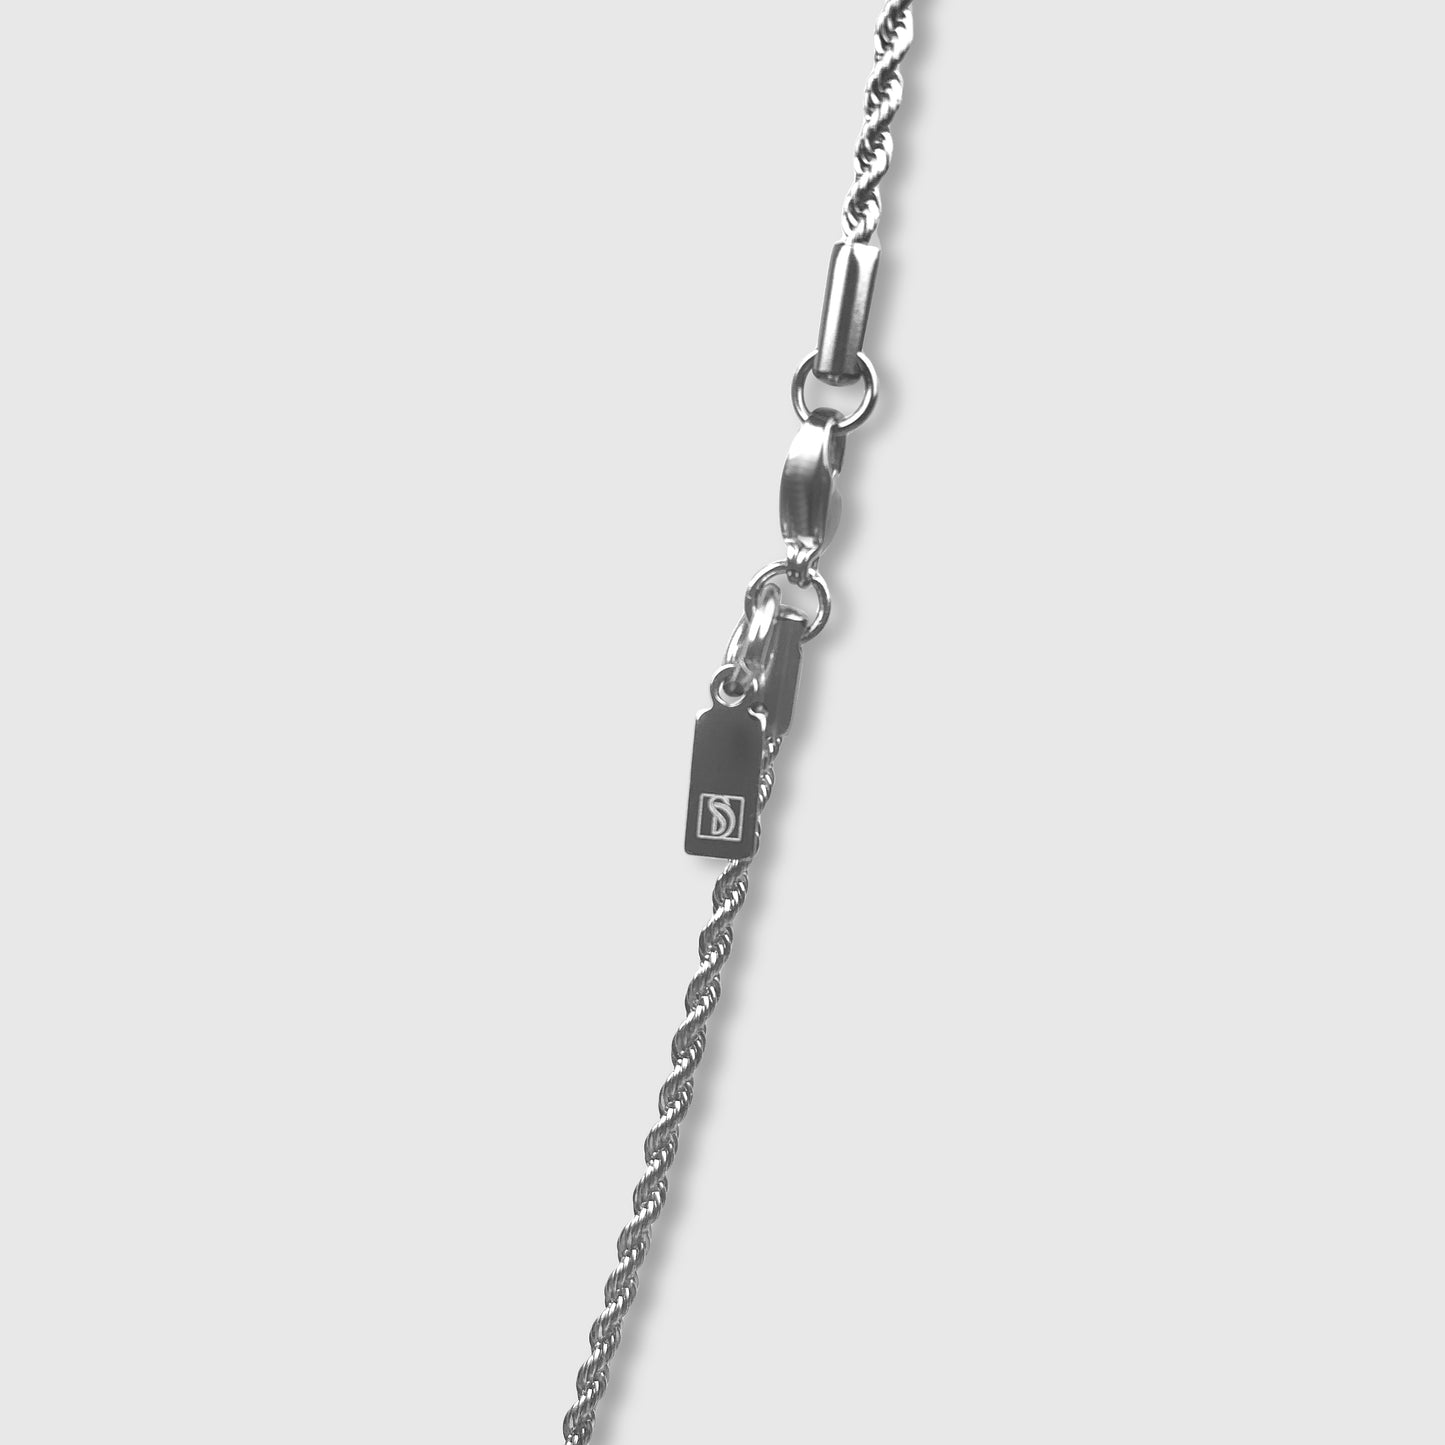 Millennium Falcon Star Wars Pendant Rope Chain Necklace